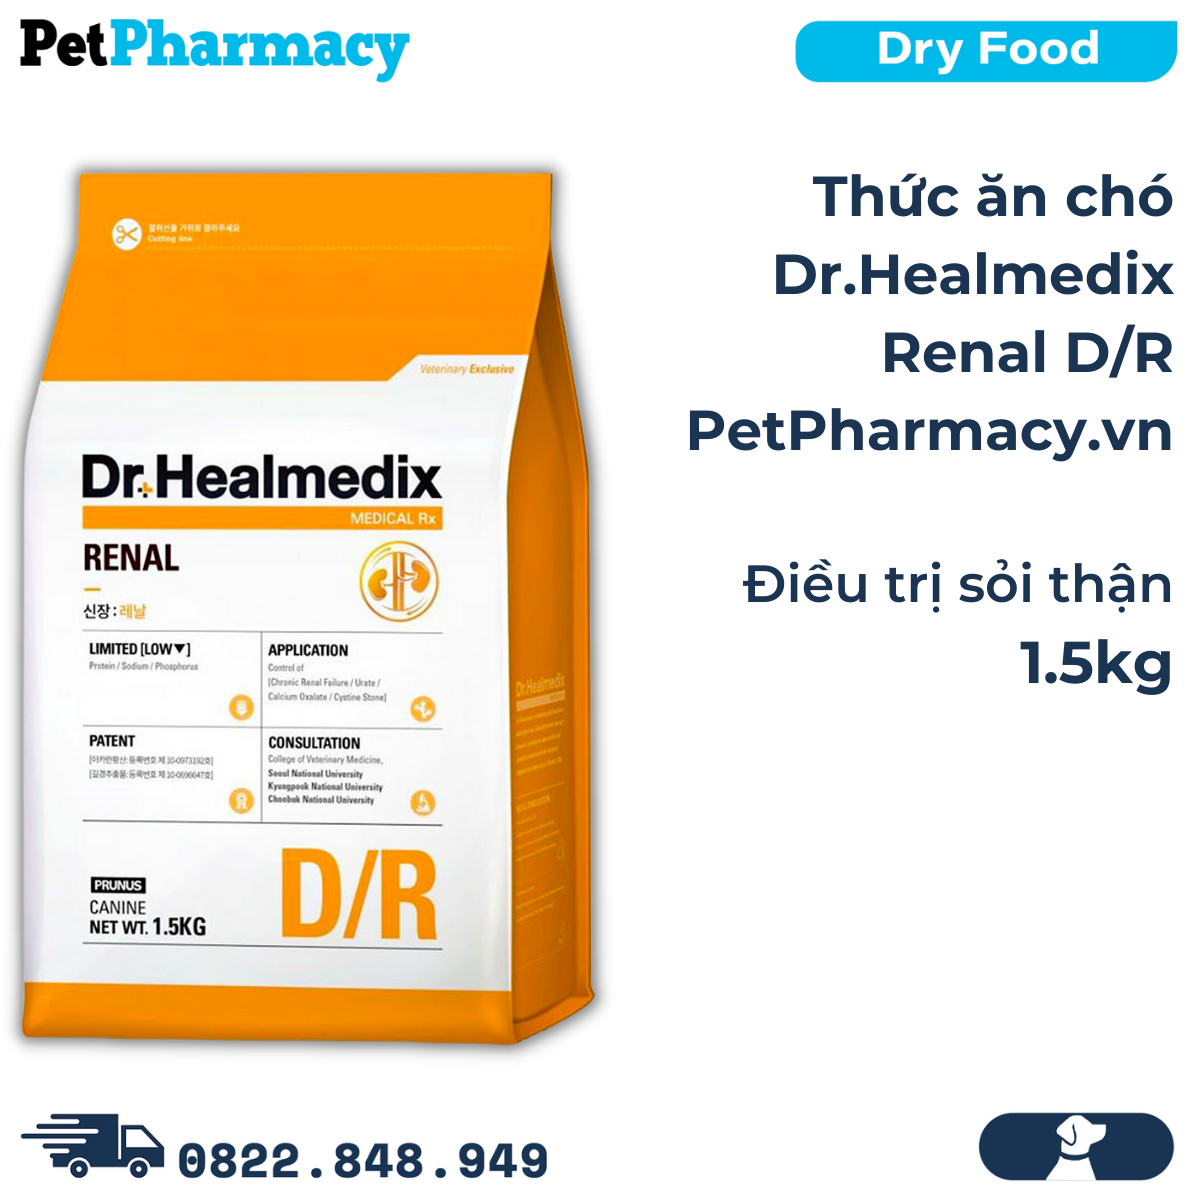  Thức ăn chó Dr.Healmedix Renal D/R 1.5kg - Trị sỏi thận PetPharmacy 